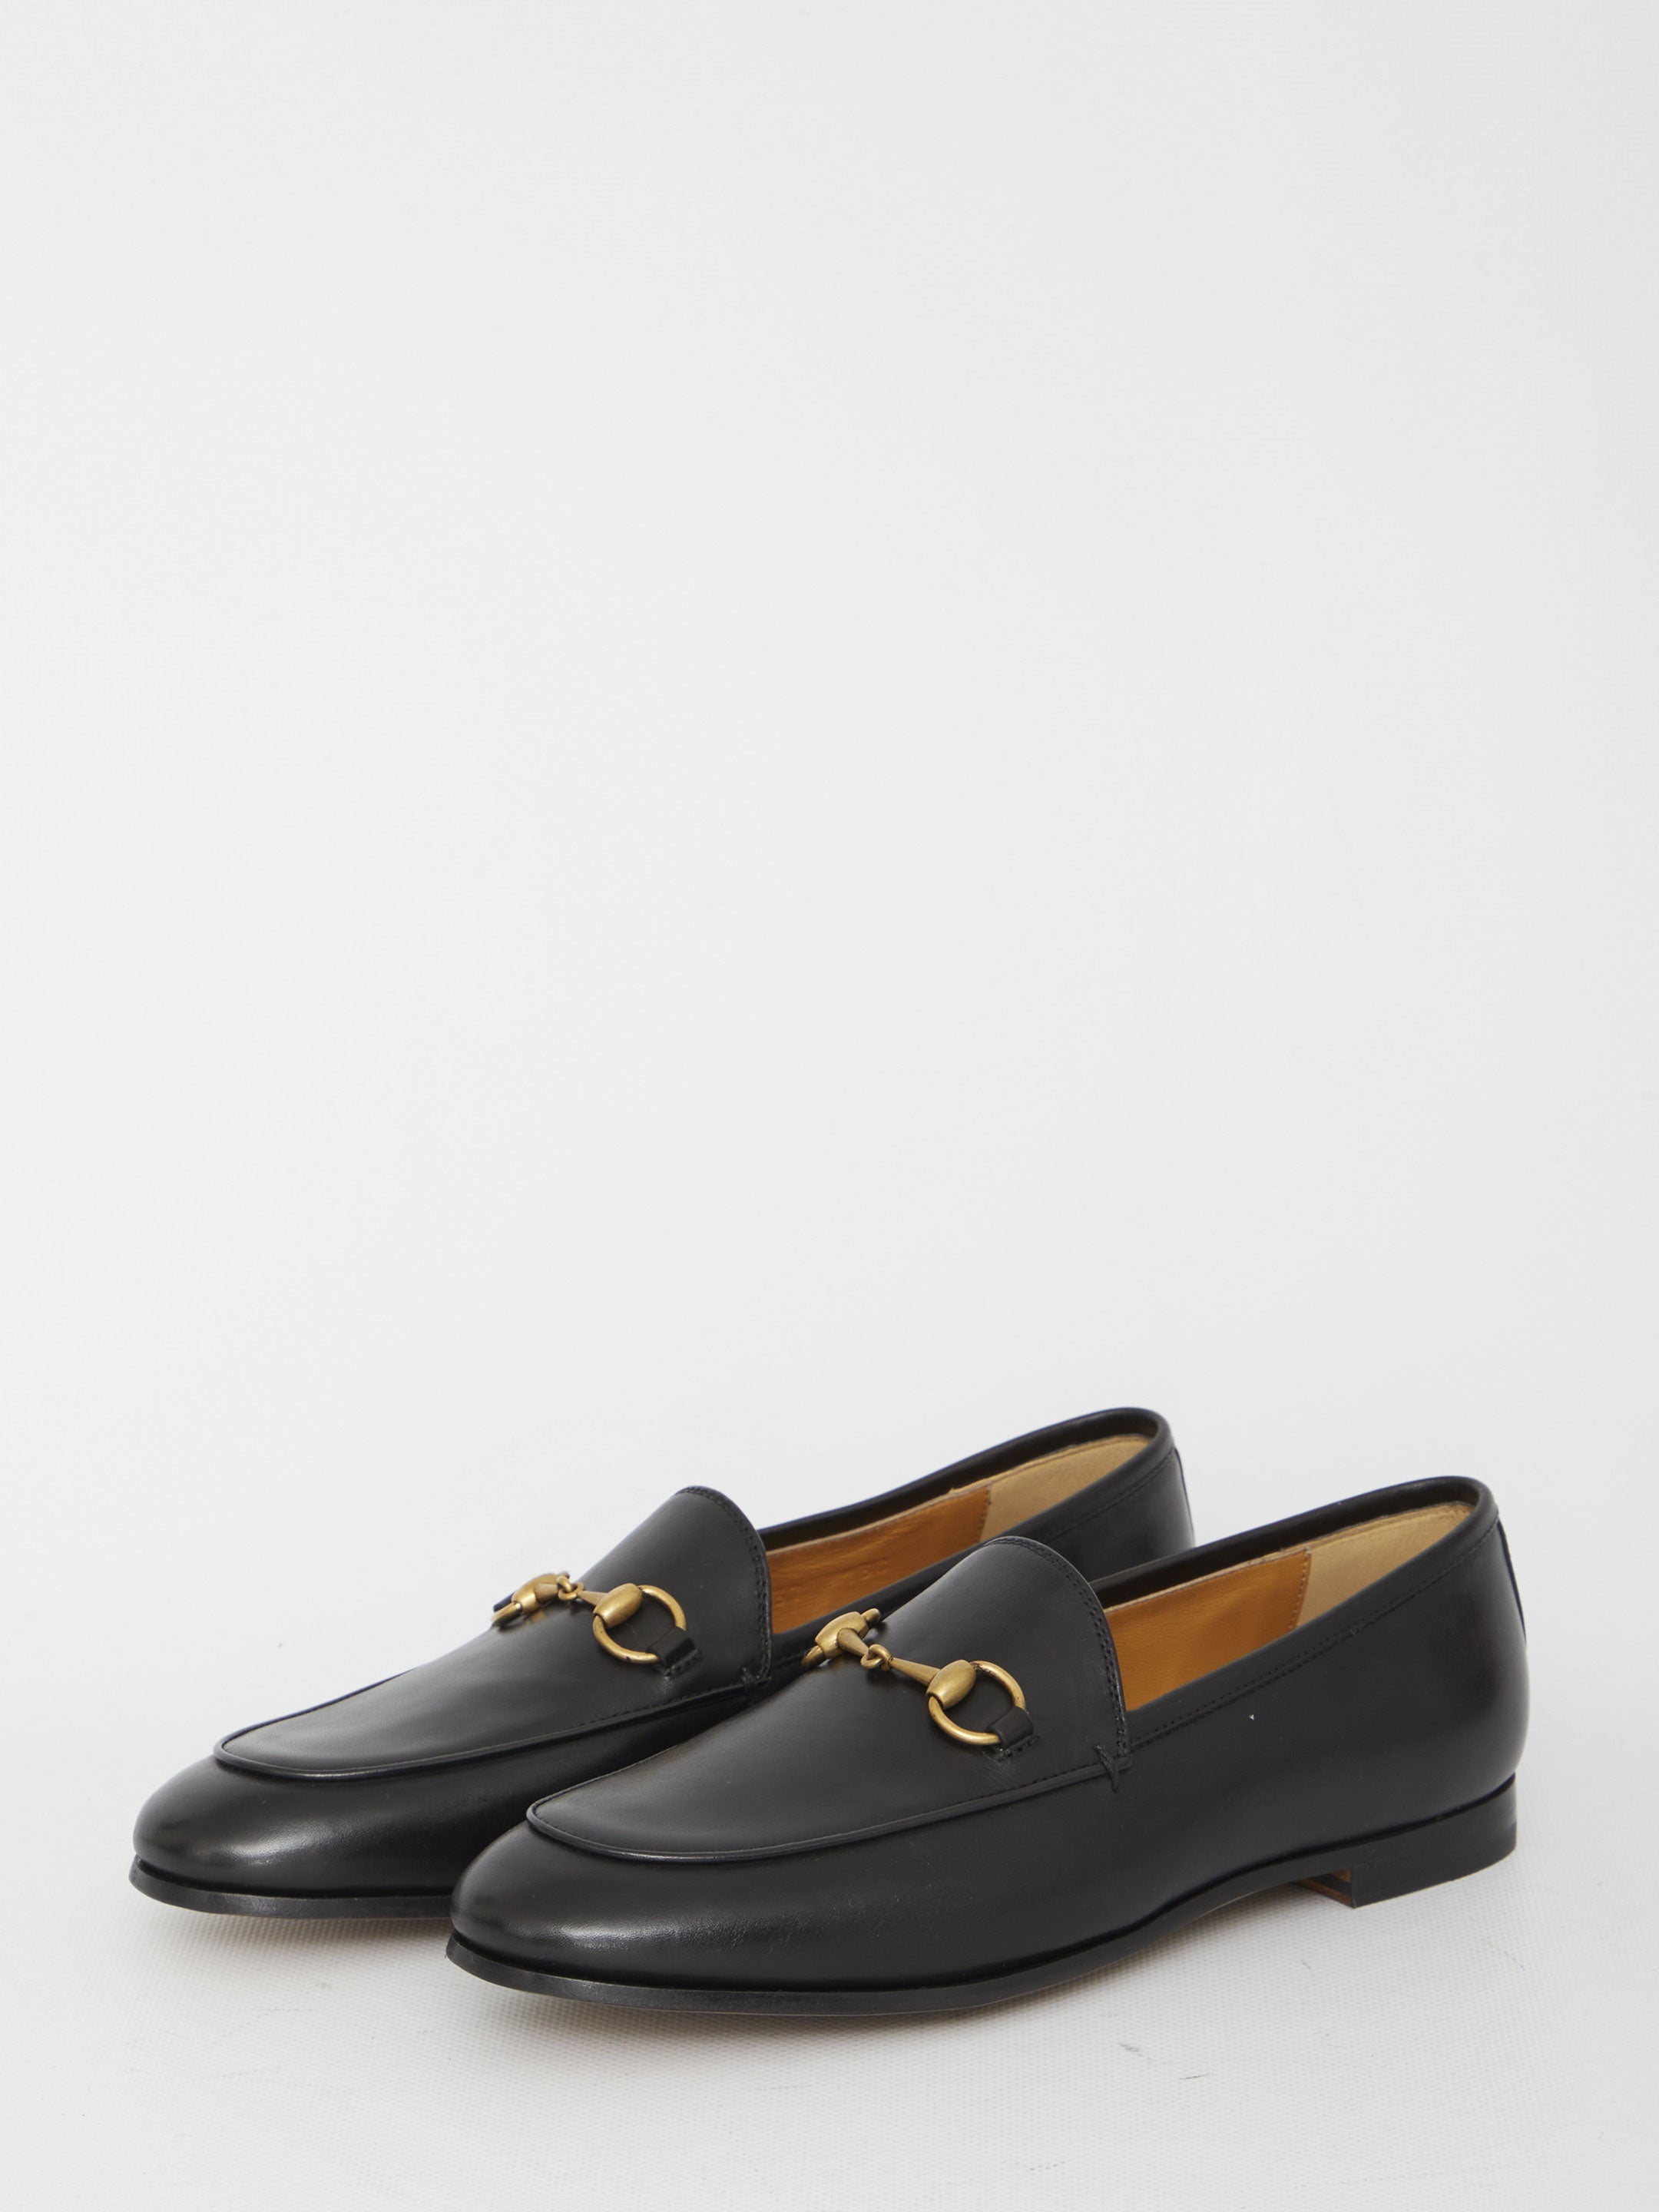 GUCCI-OUTLET-SALE-Jordan-loafers-Flache-Schuhe-38-BLACK-ARCHIVE-COLLECTION-2.jpg